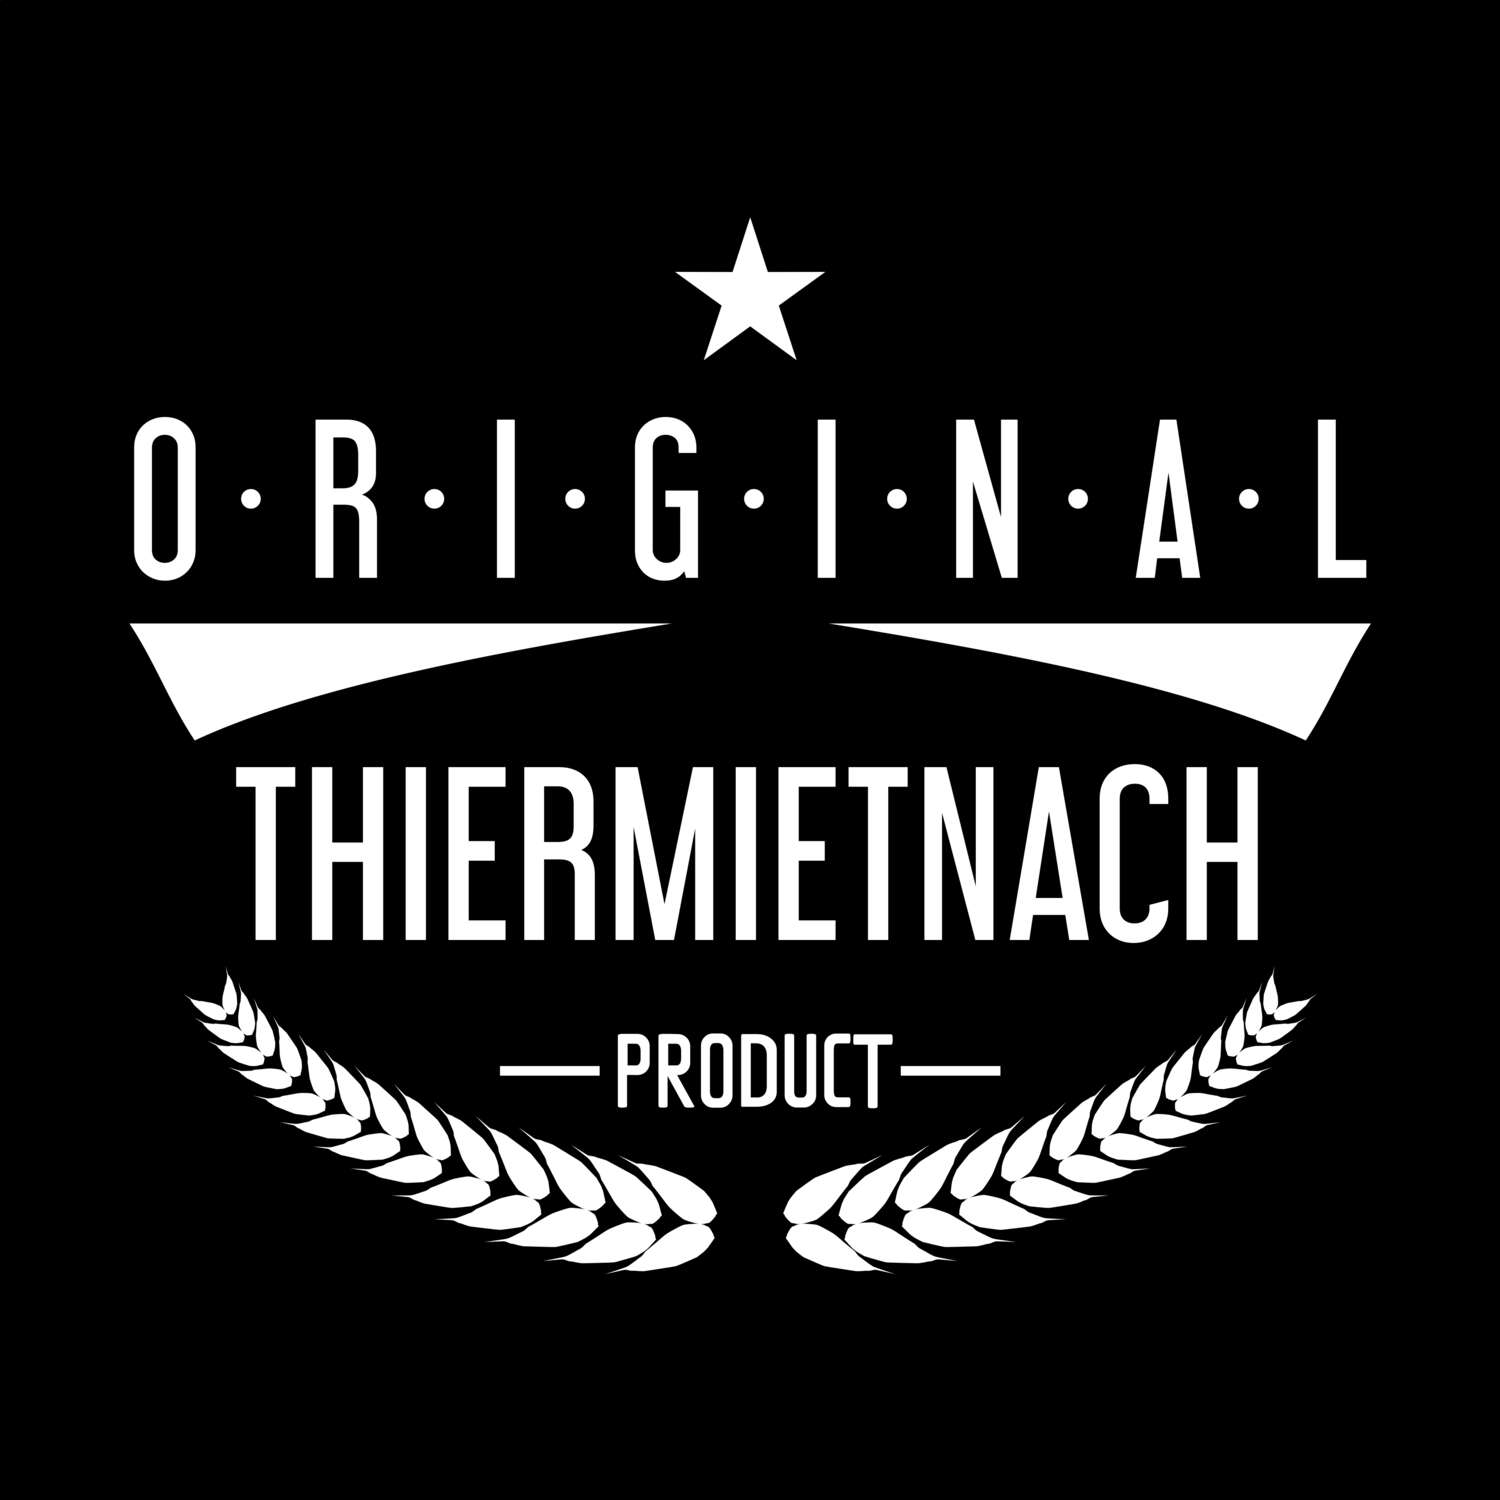 Thiermietnach T-Shirt »Original Product«